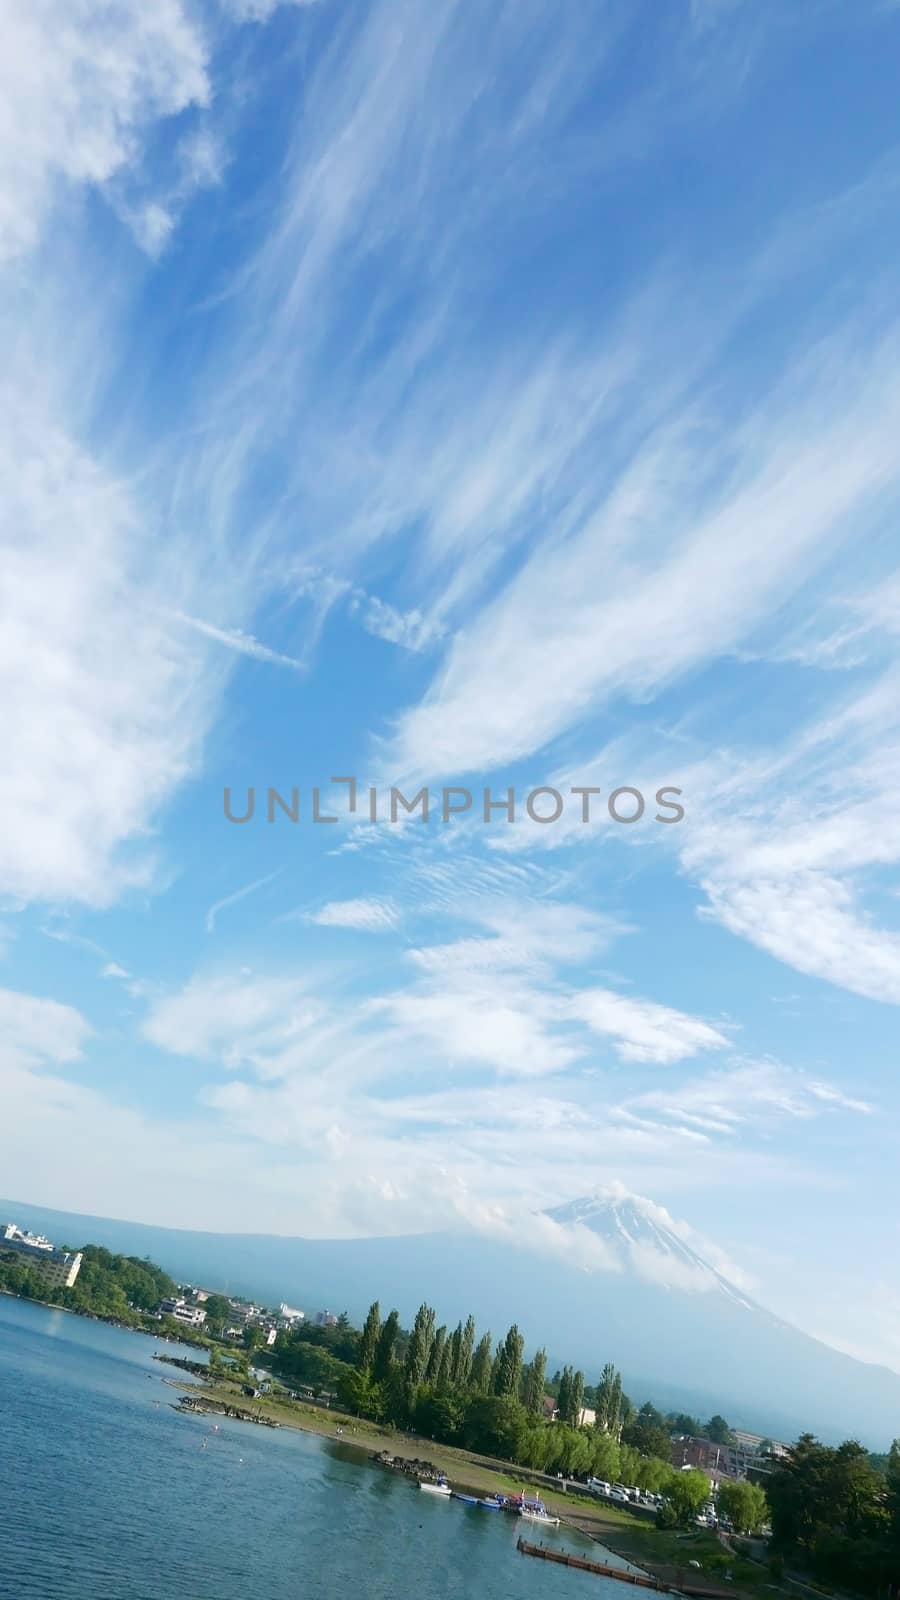 Japan Mt. Fuji Fujiyama Mountain, lake and blue sky with nice clouds by cougarsan